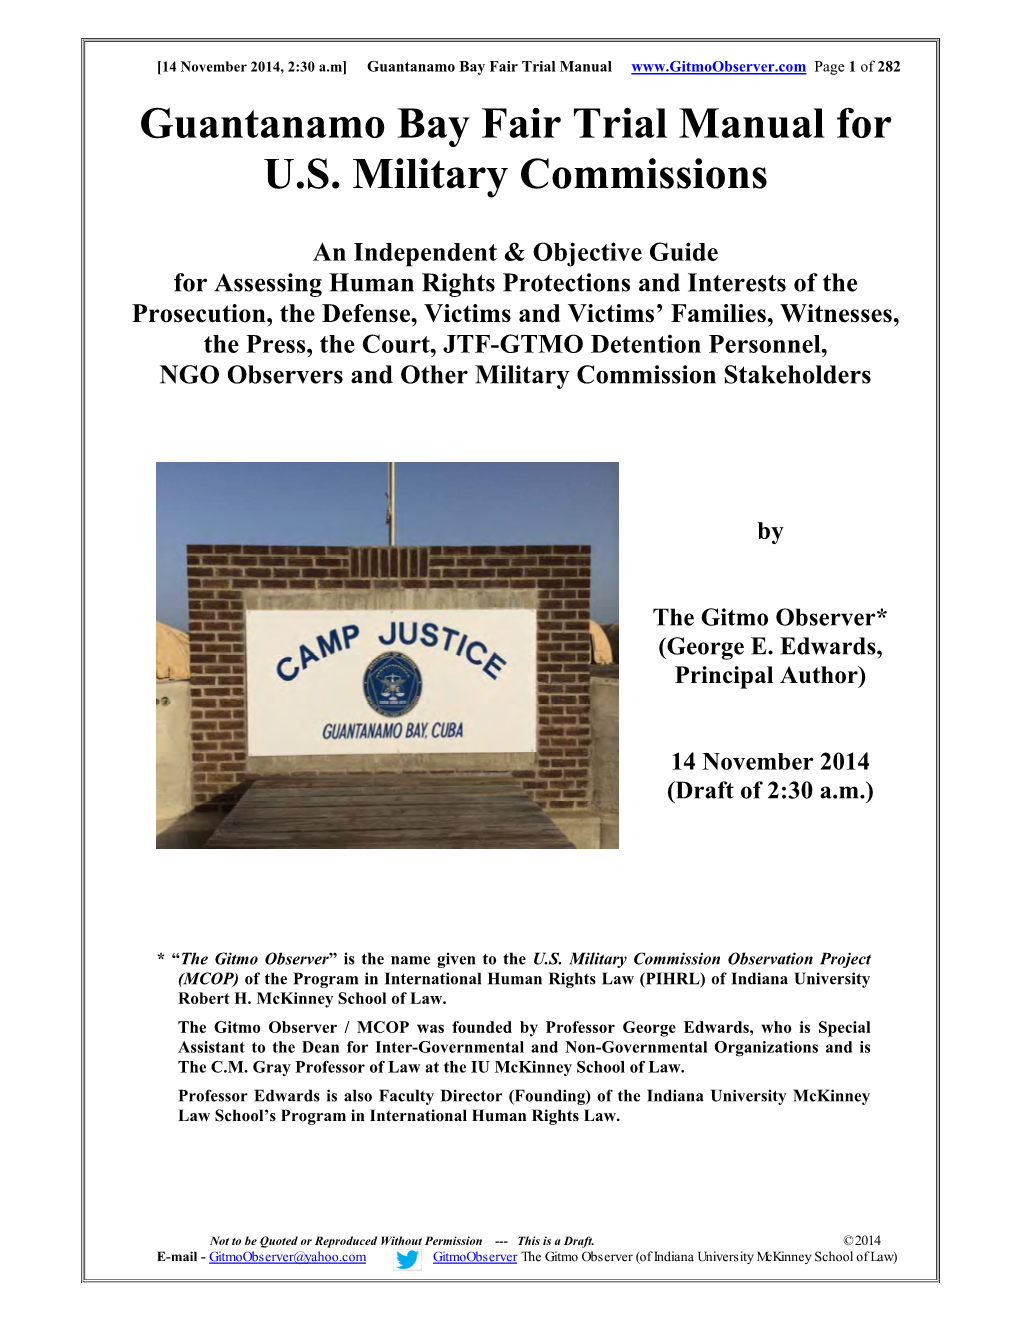 Guantanamo Bay Fair Trial Manual for U.S. Military Commissions